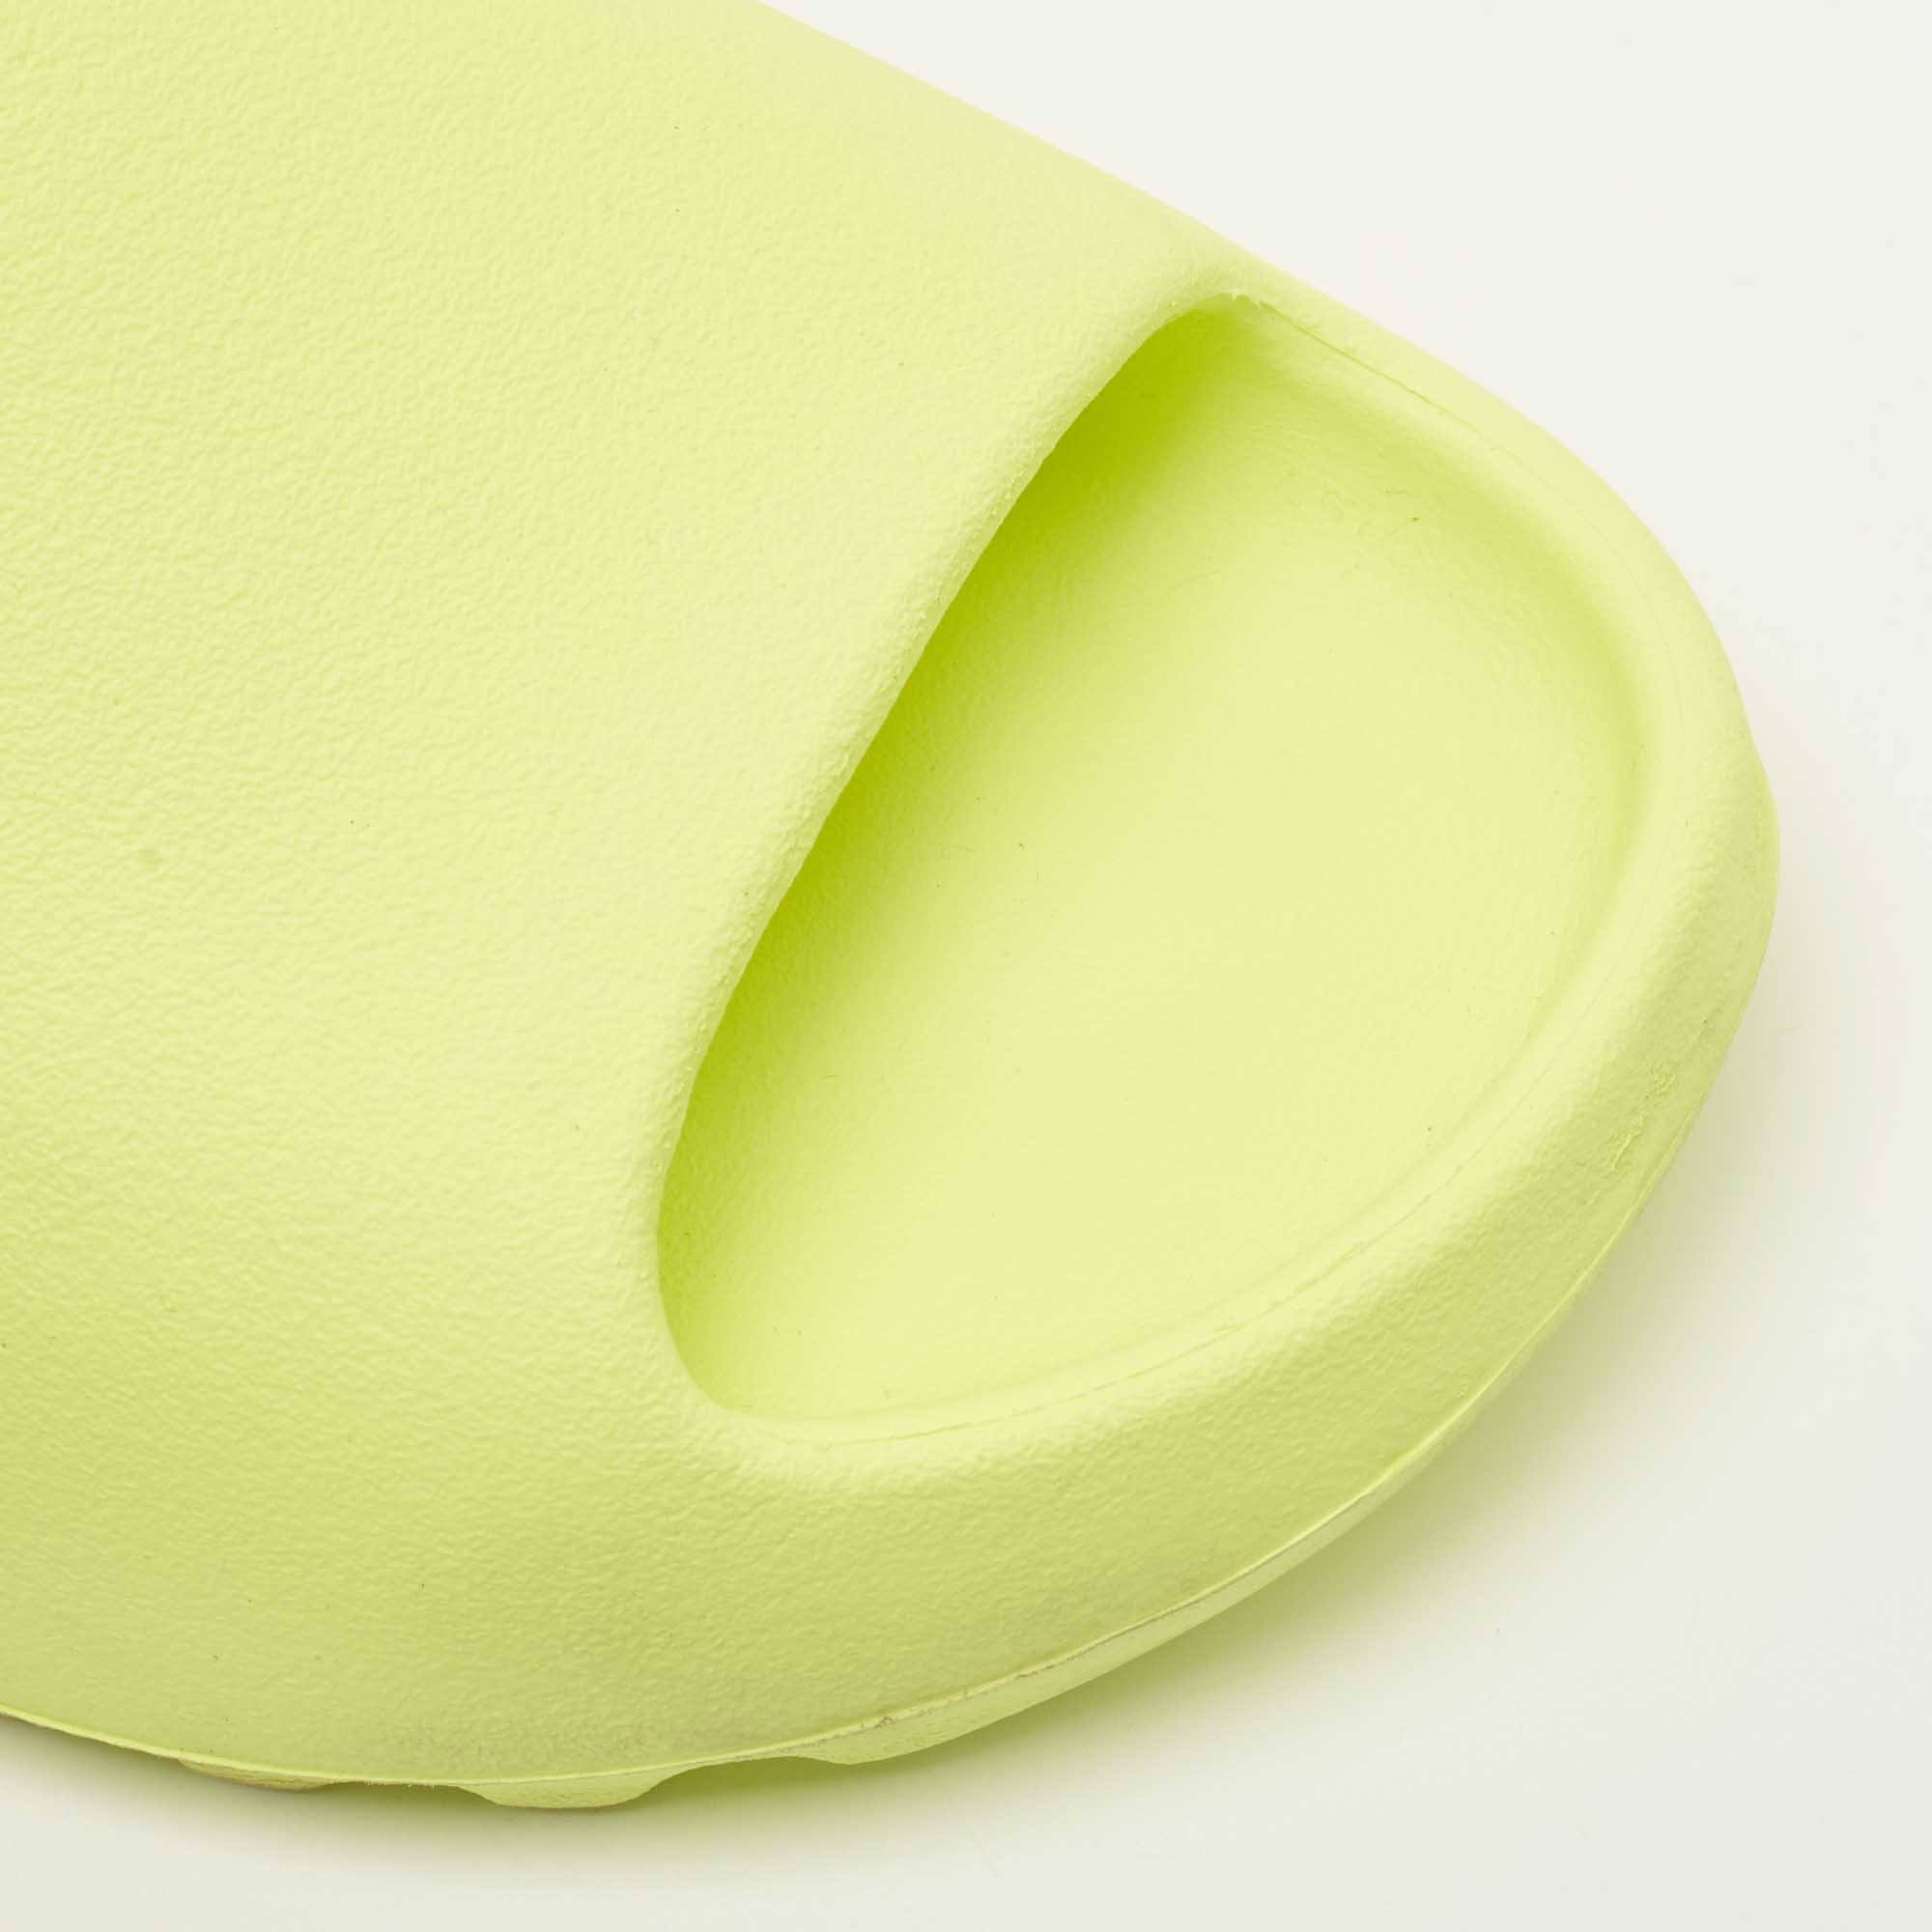 Yeezy X Adidas Neon Green Rubber Glow Green Slides Size 44 1/2